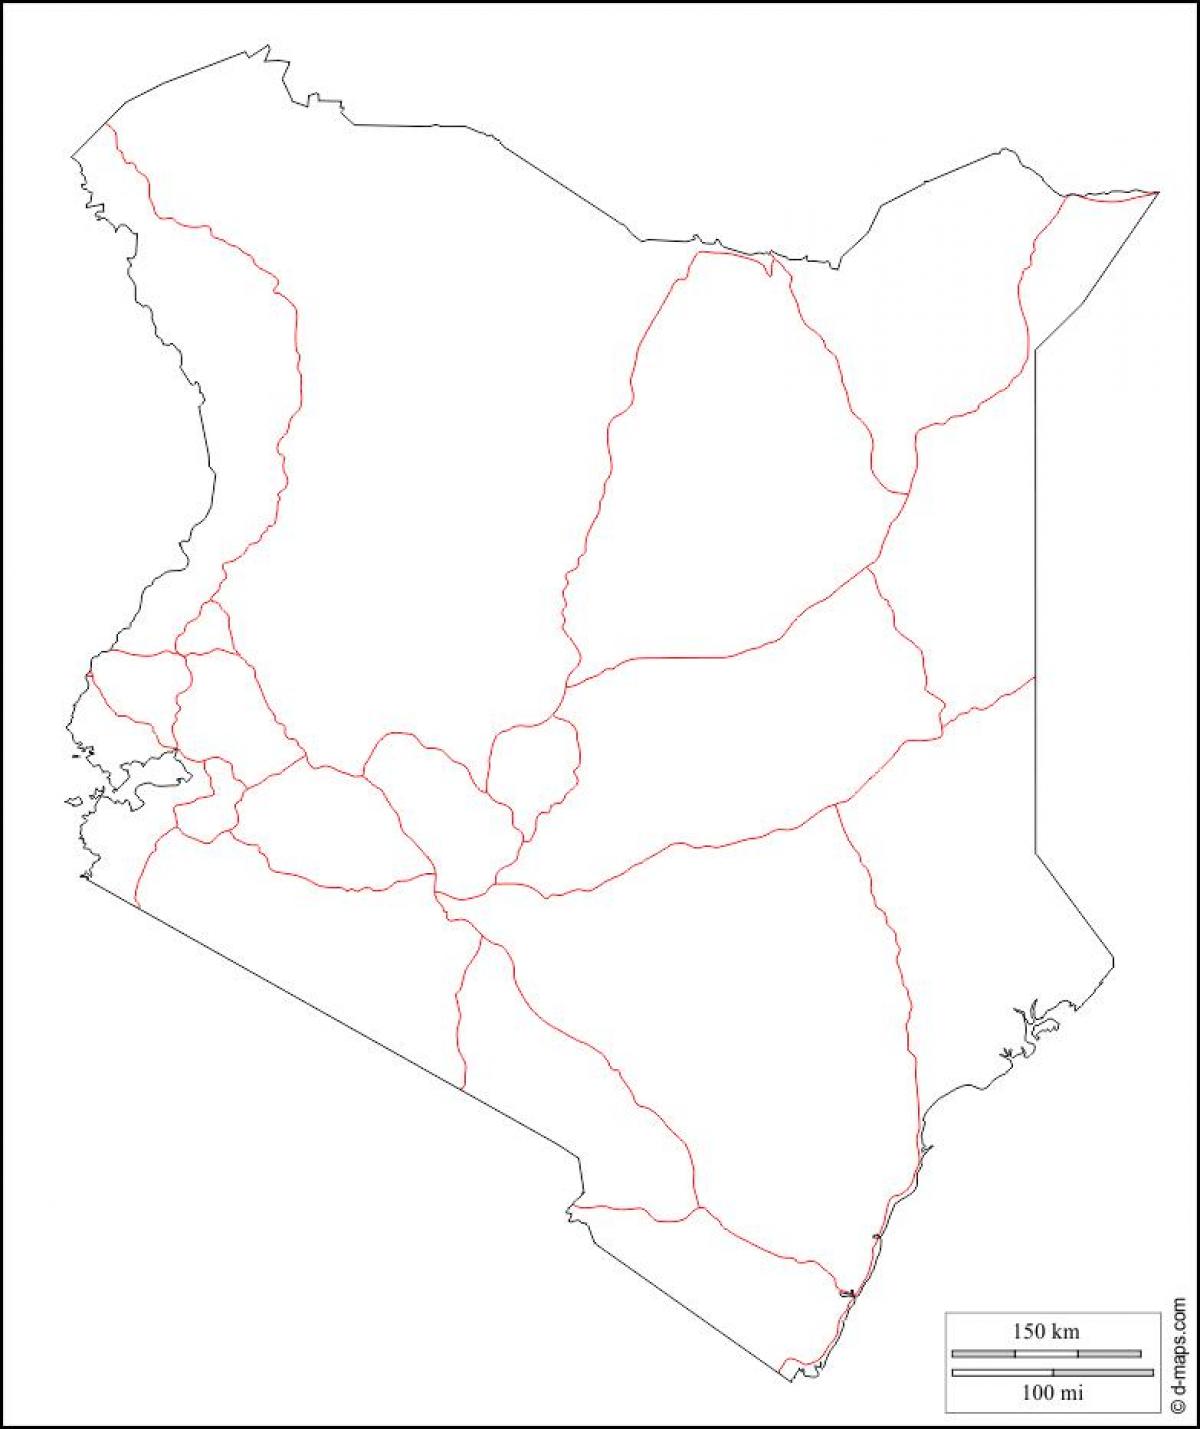 کینیا خالی نقشہ